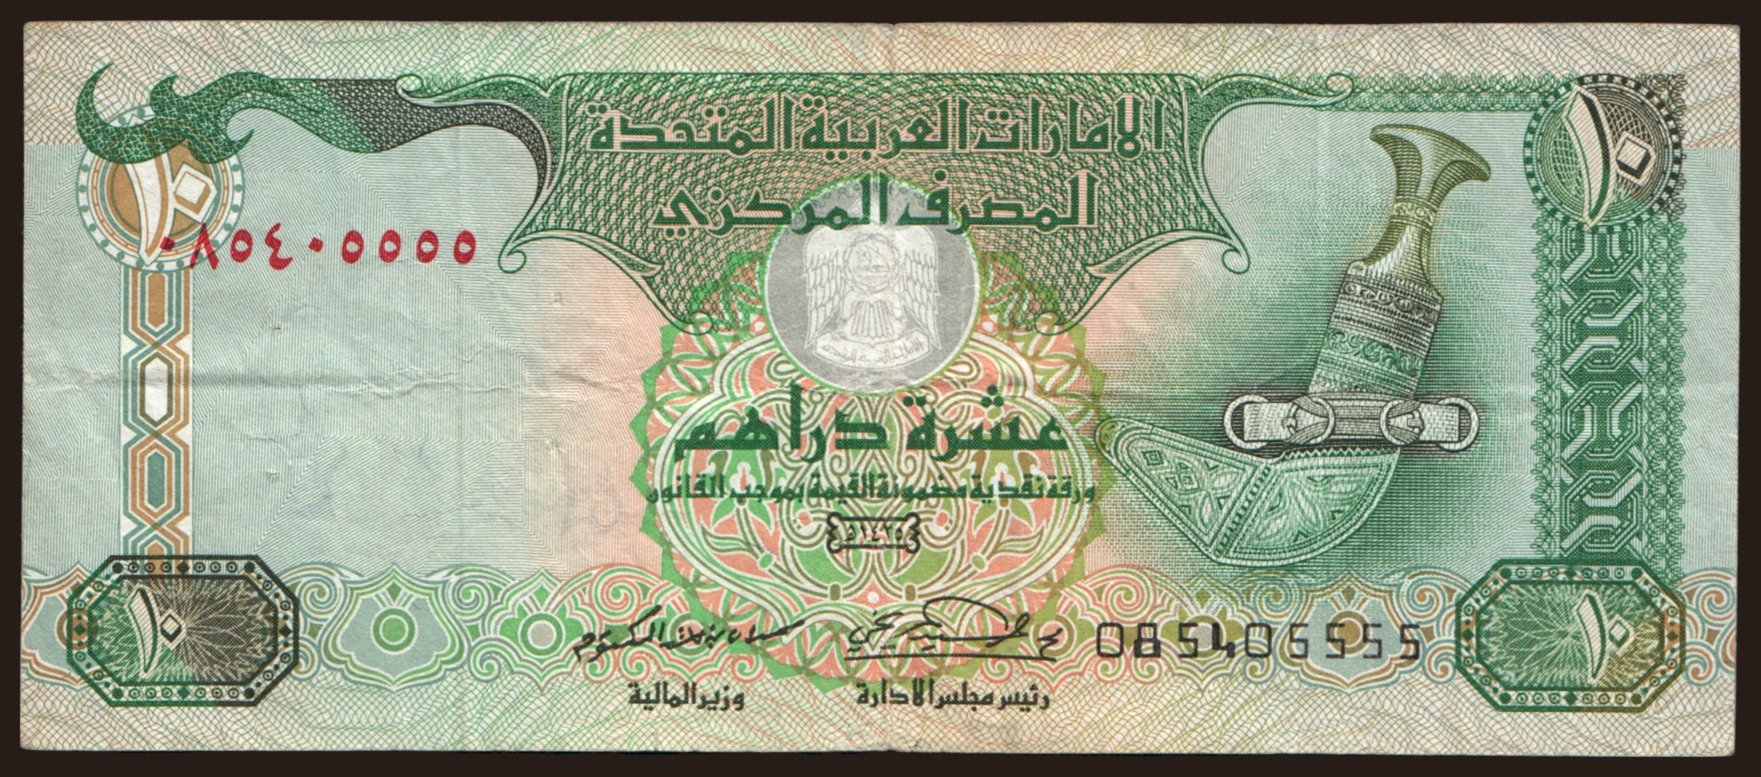 10 dirhams, 2004